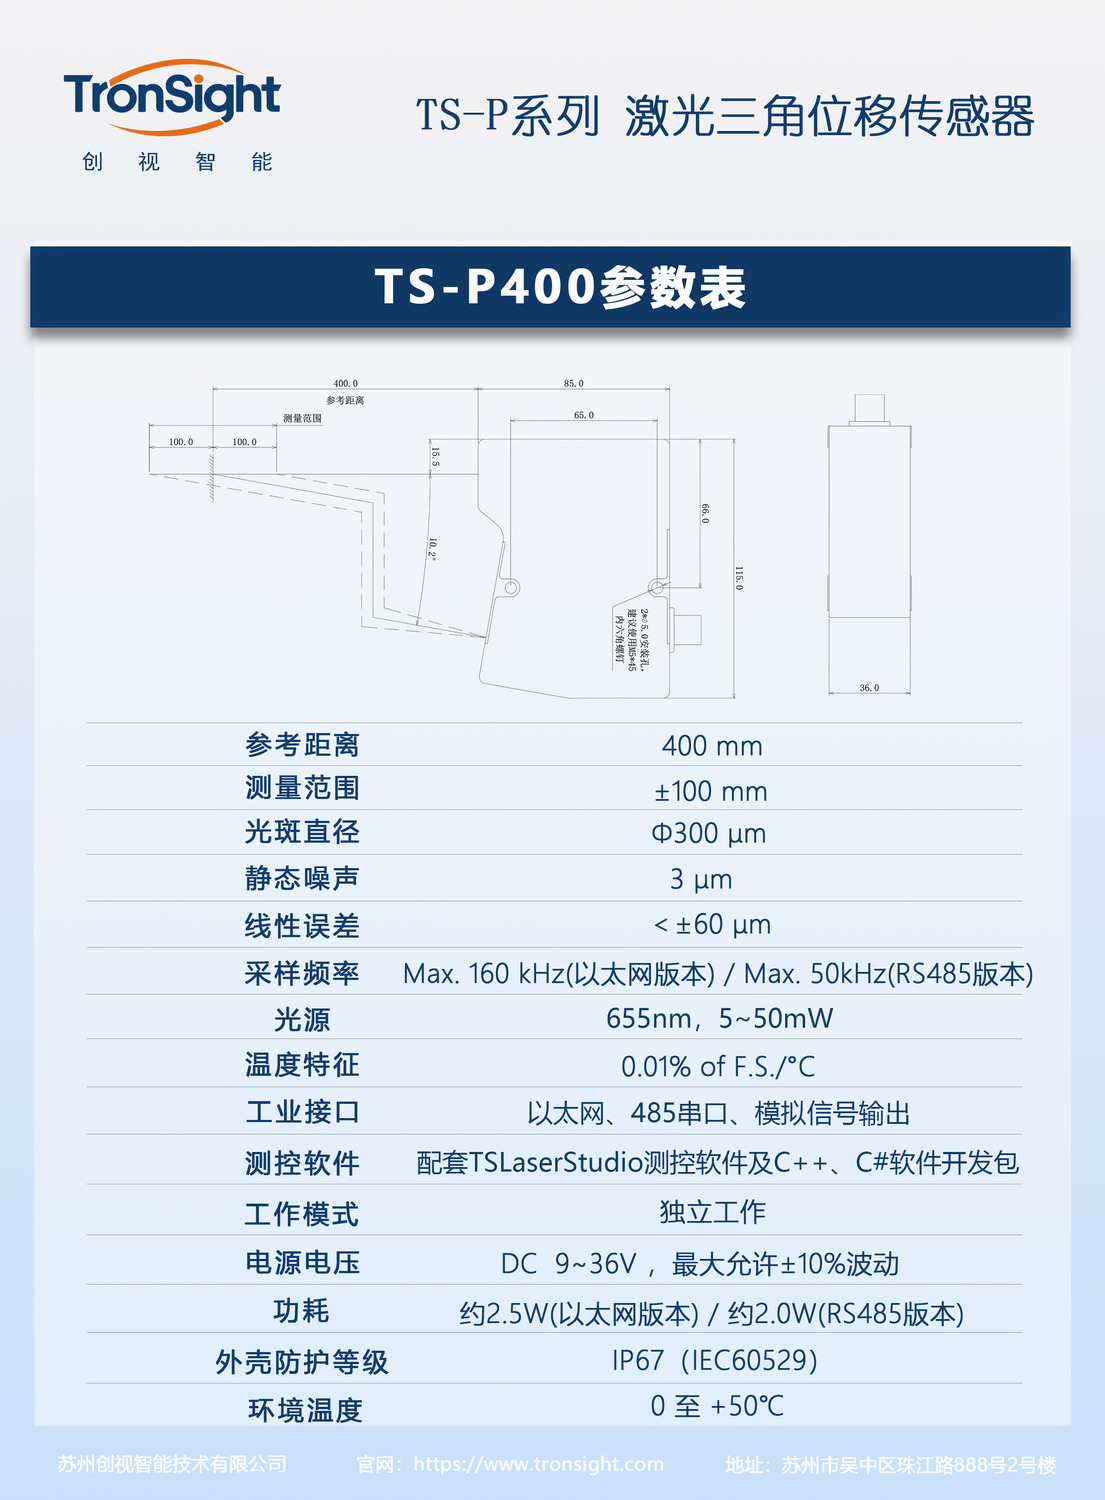 TS-P400.jpg